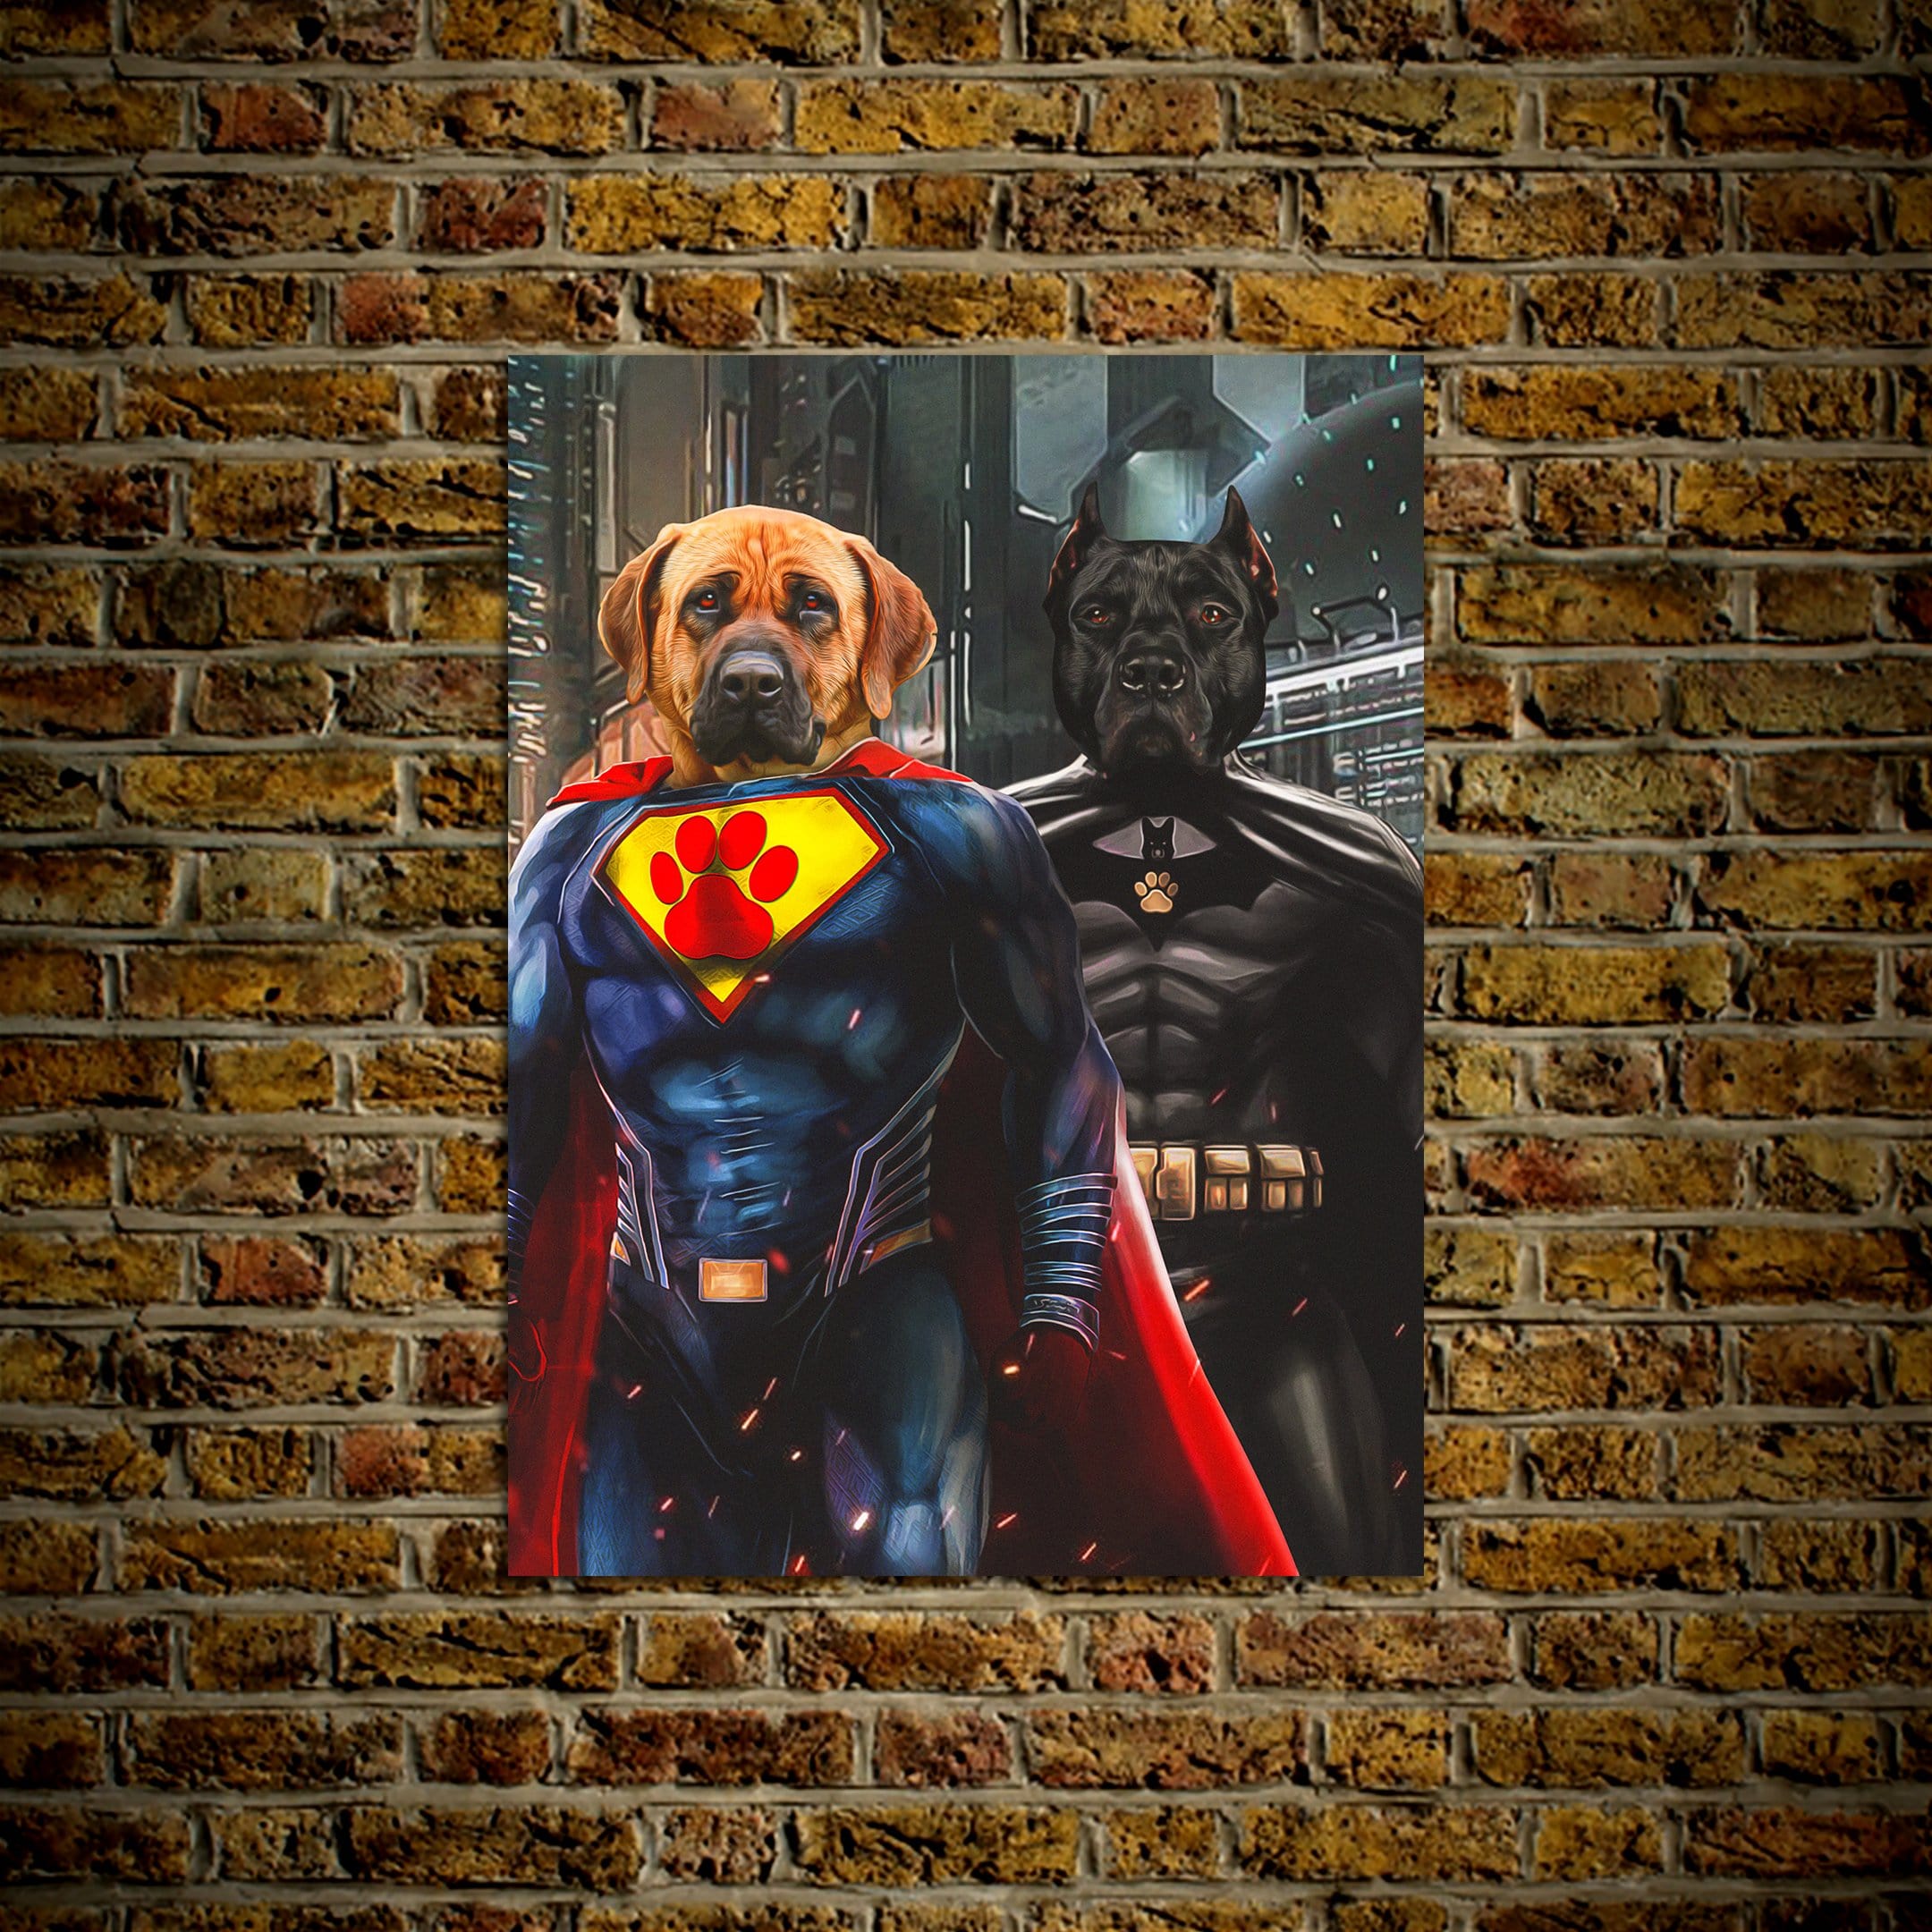 &#39;Superdog &amp; Batdog&#39; Personalized 2 Pet Poster